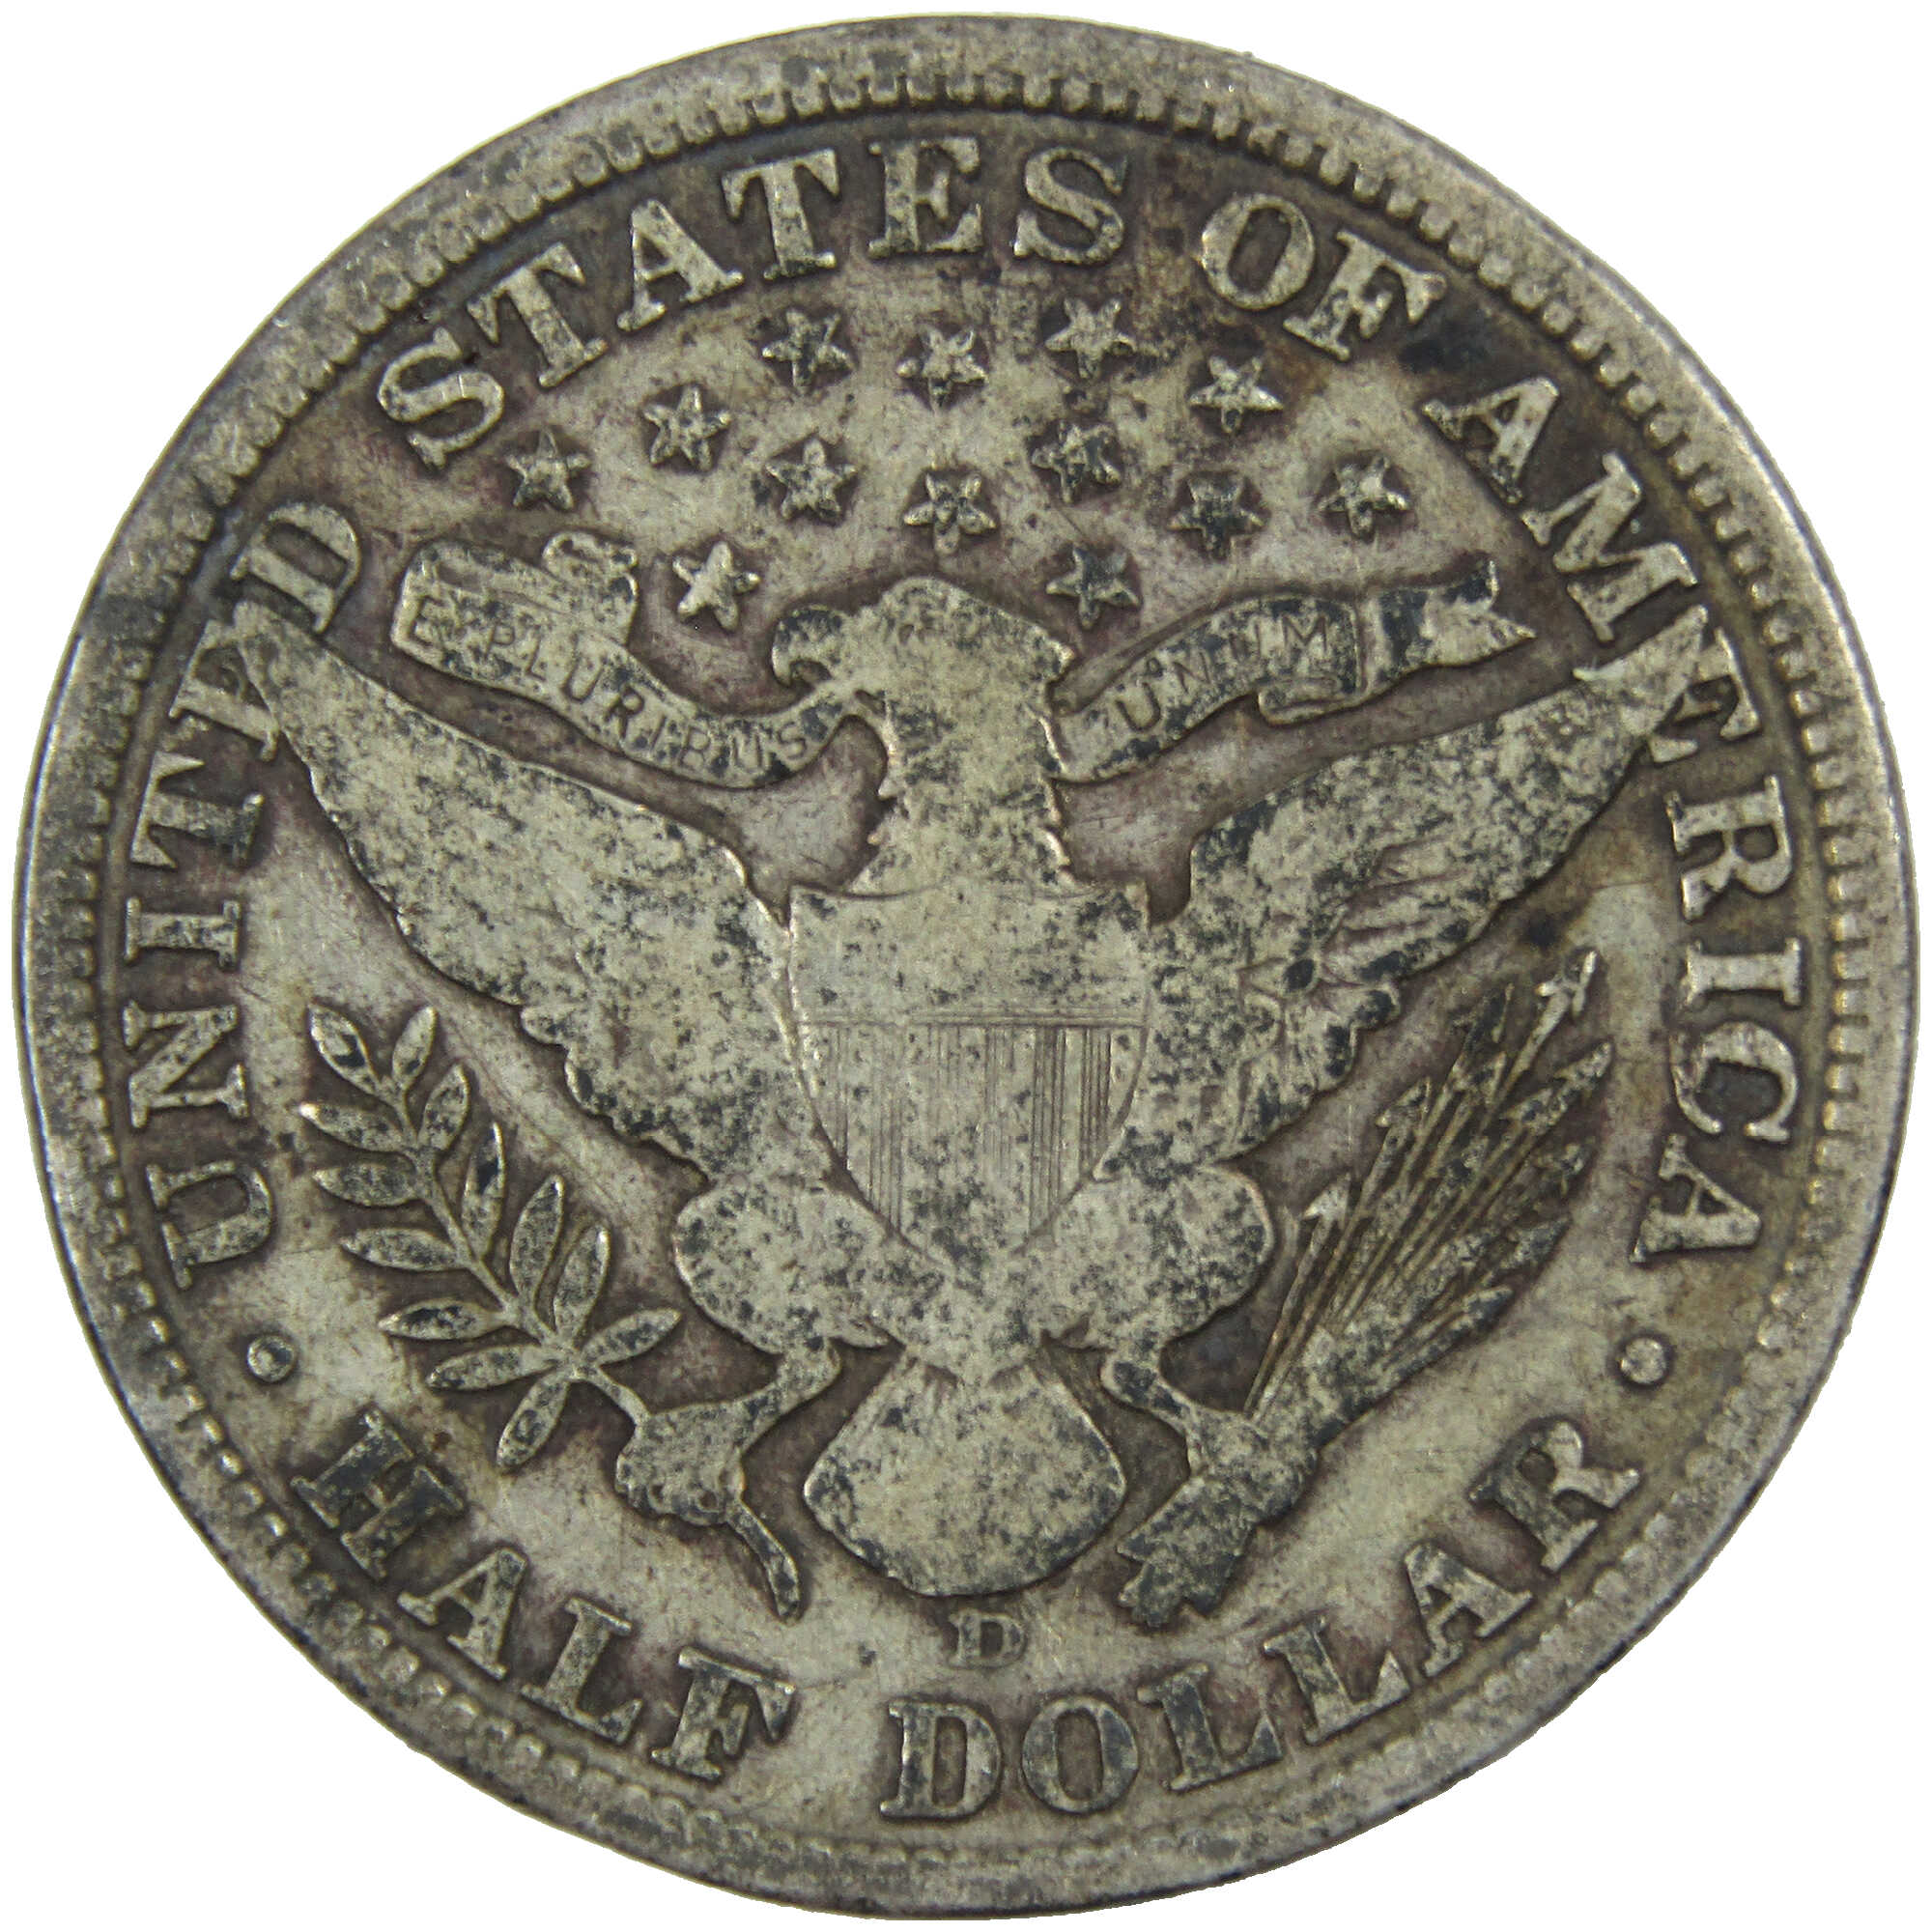 1907 D Barber Half Dollar VG Very Good Silver 50c Coin SKU:I12793